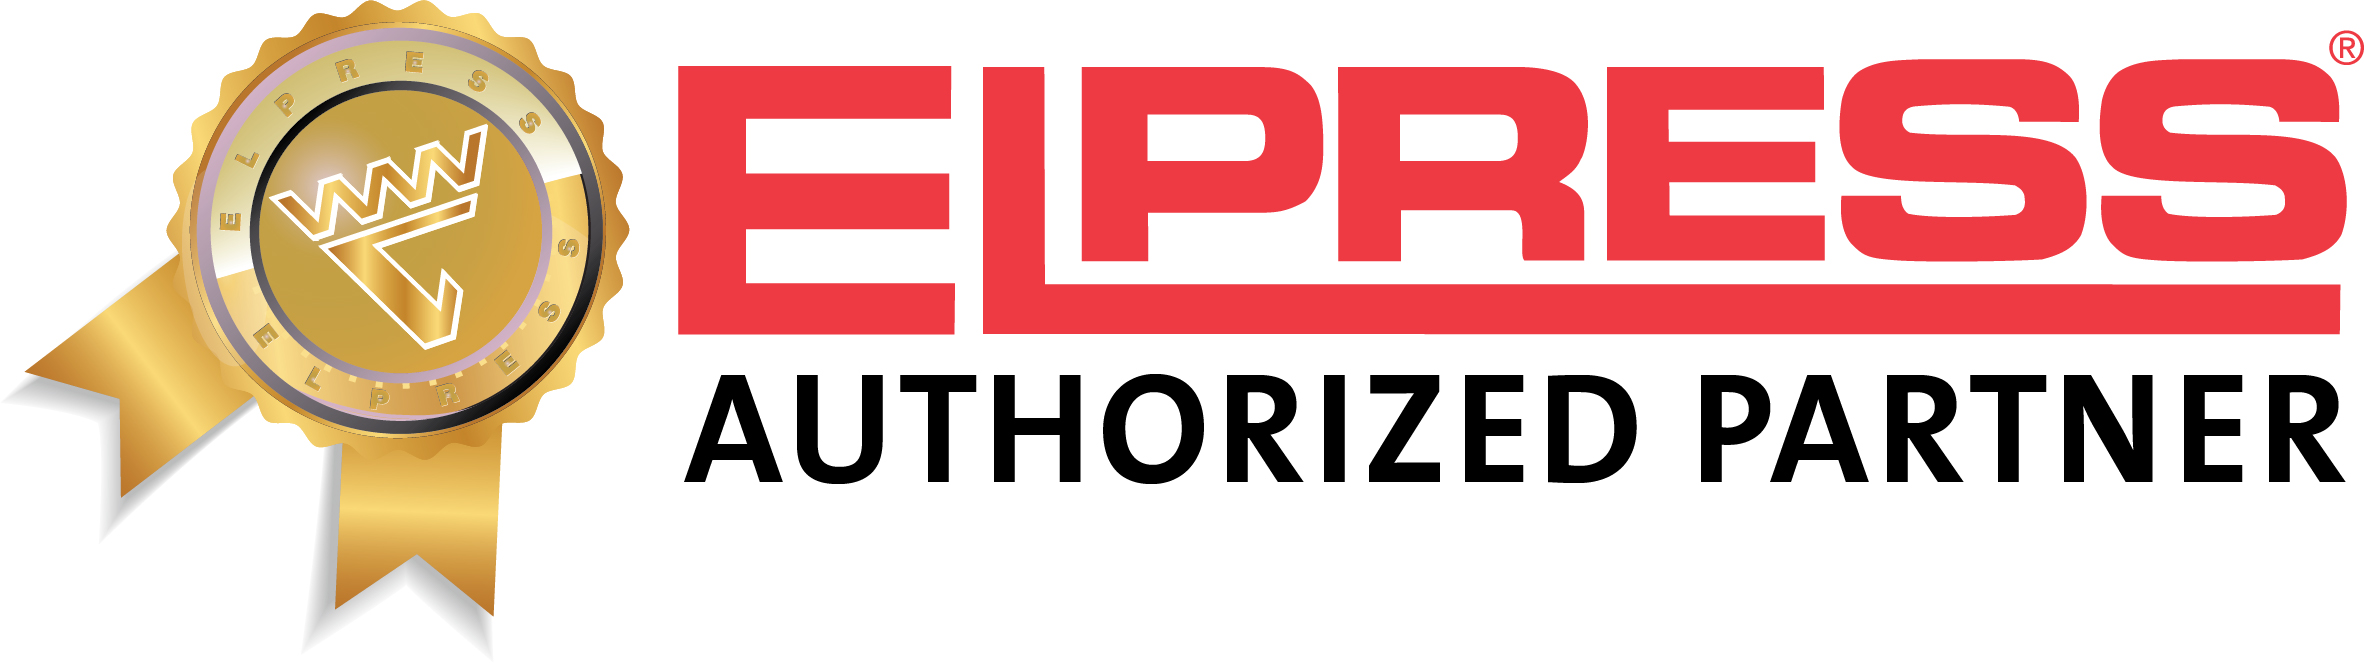 Elpress Authorized partner - Elpress Distributor UK - Elpress Supplier - High Quality Lugs Authorised Elpress Service Centre: Maintenance, Service & Calibration